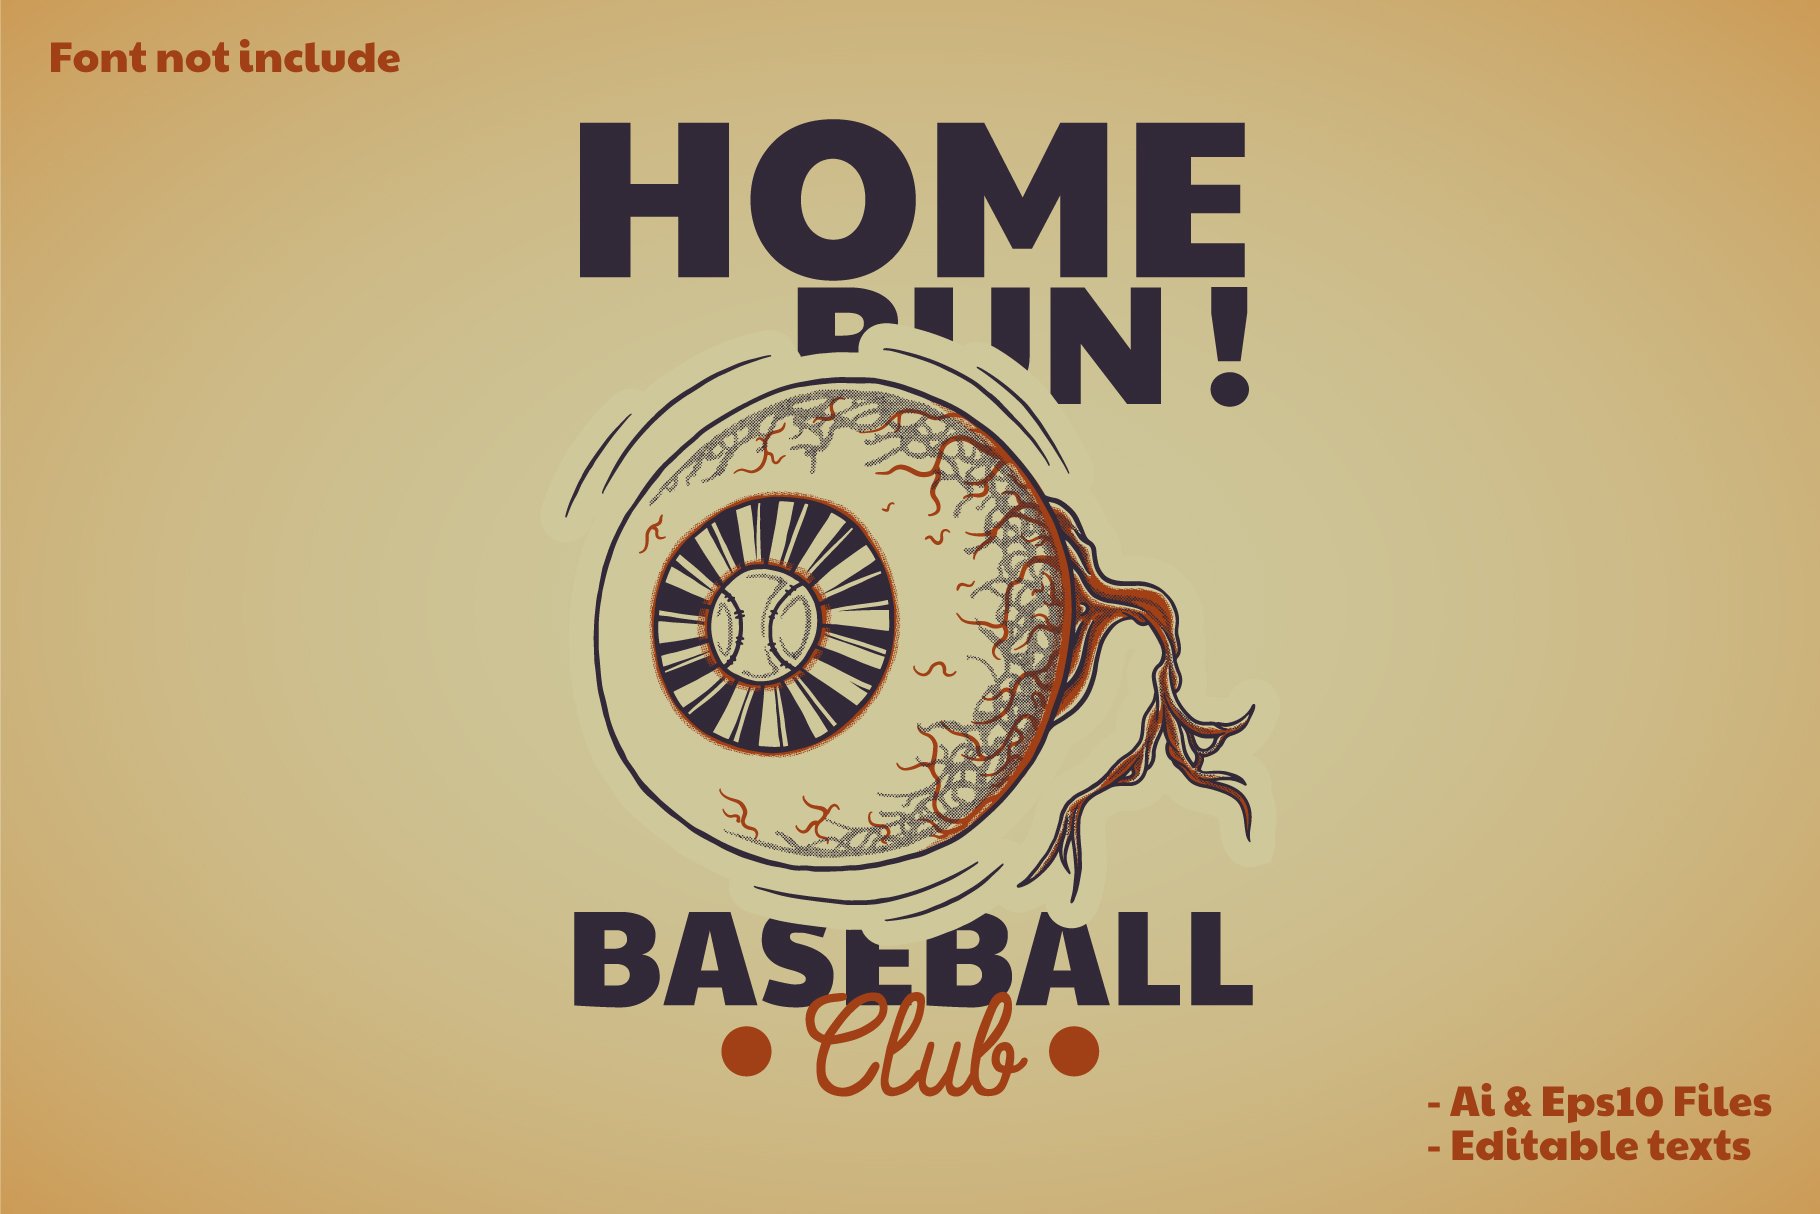 Retro baseball eye poster cover image.